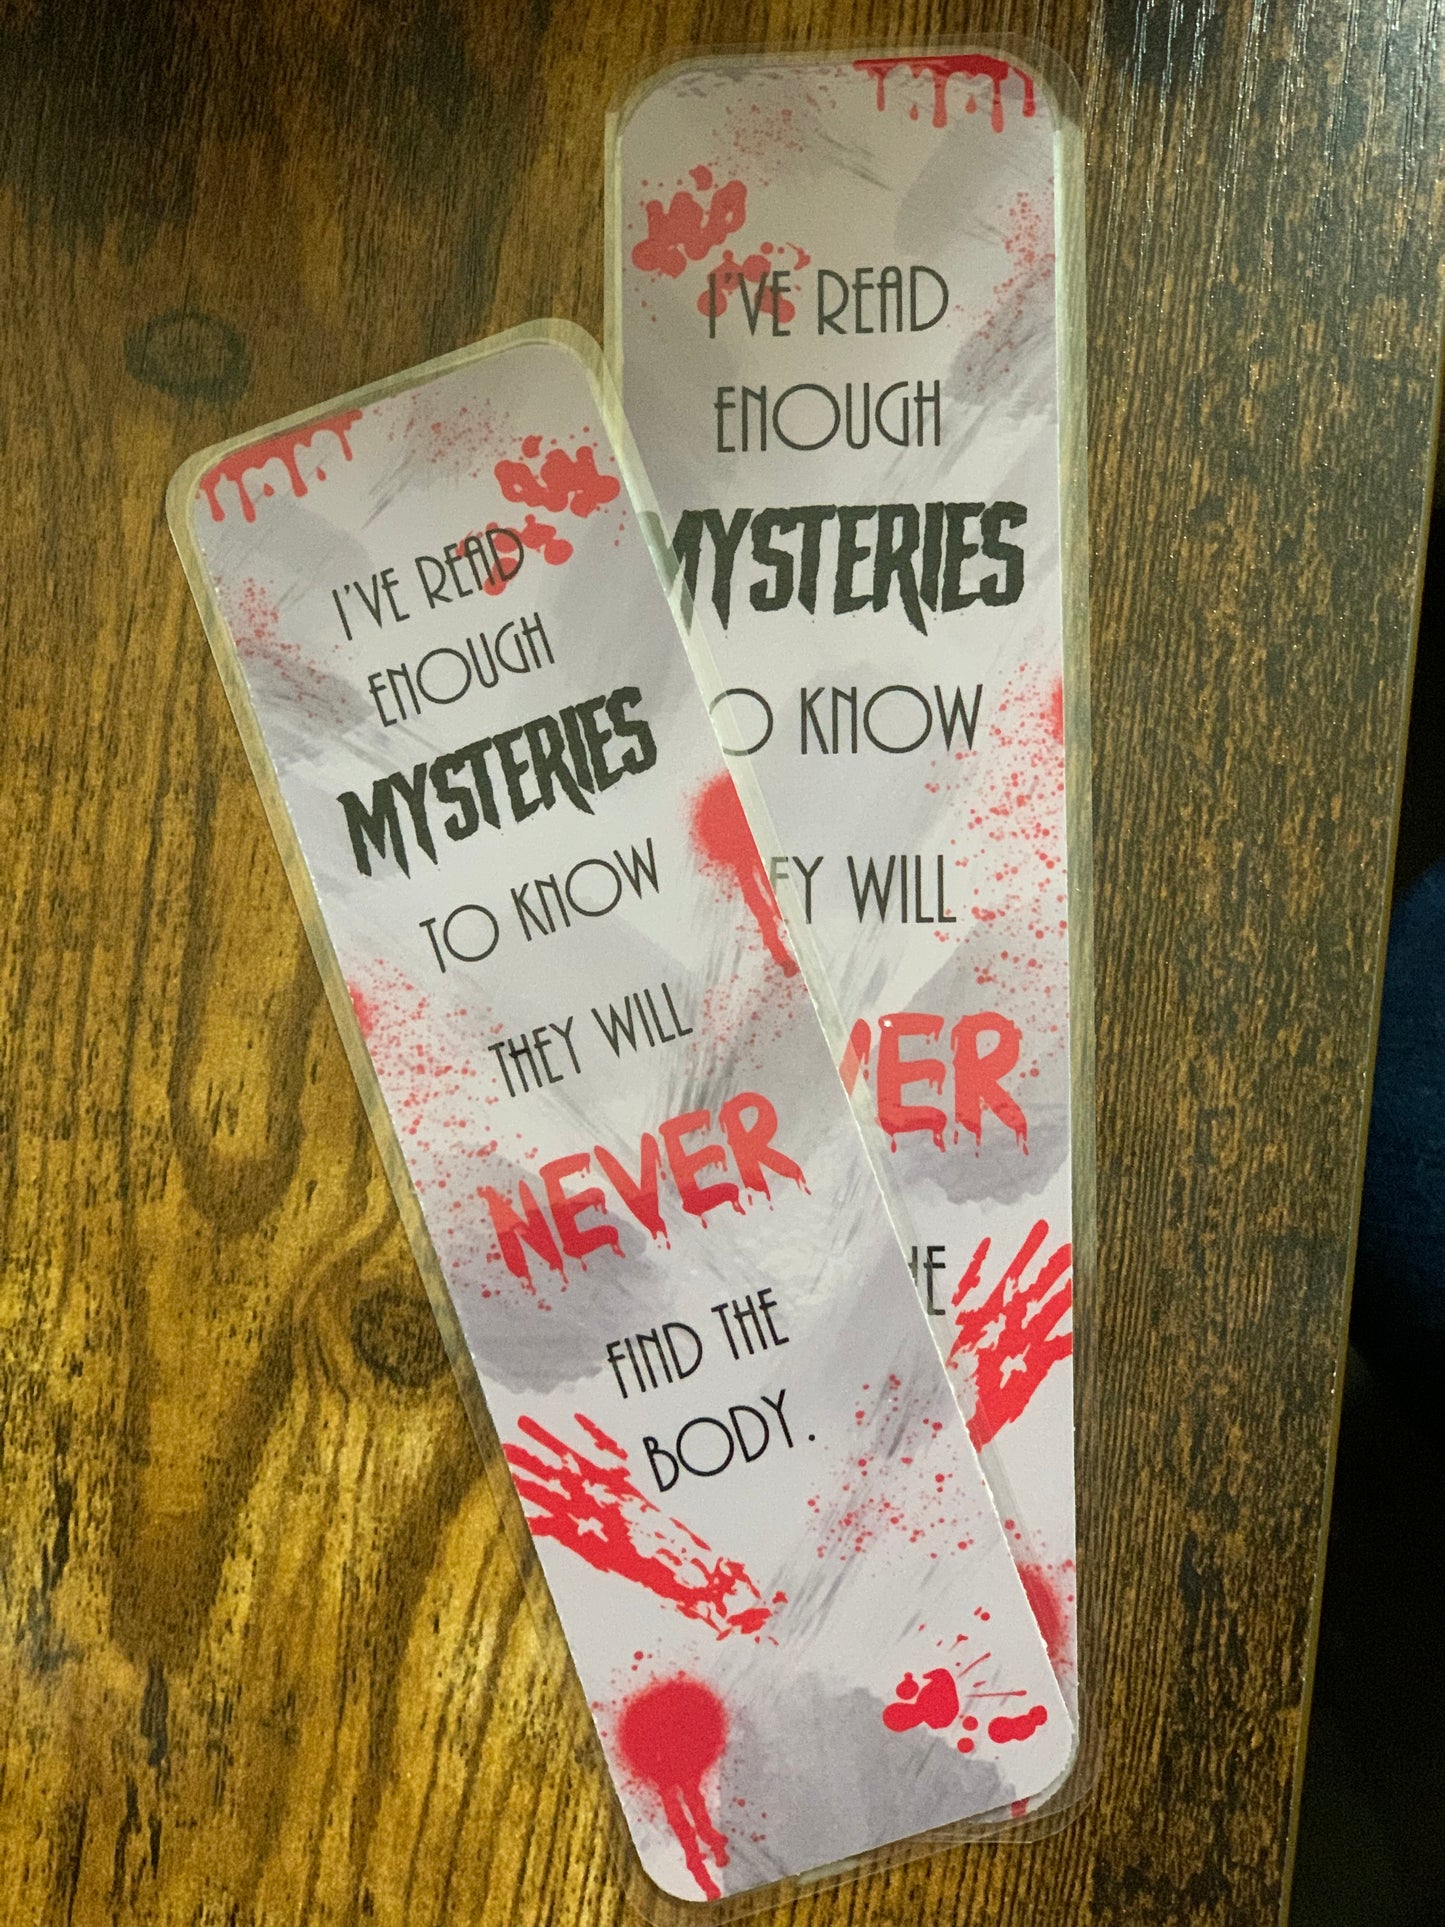 No Body Mystery Bookmark